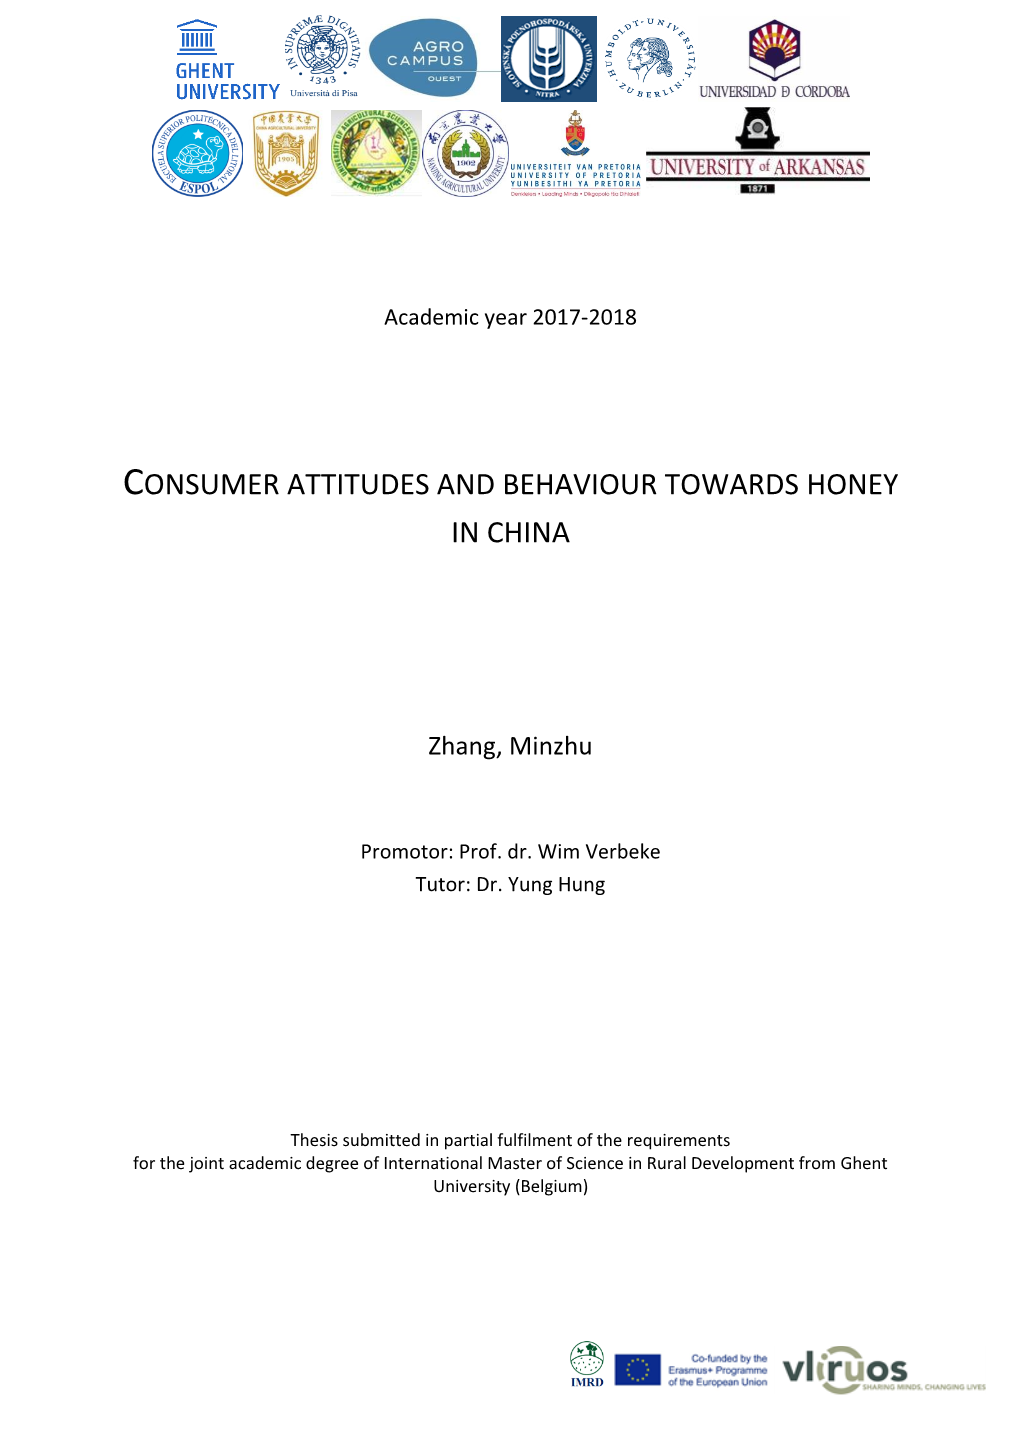 Consumer Attitudes and Behaviour Towards Honey in China